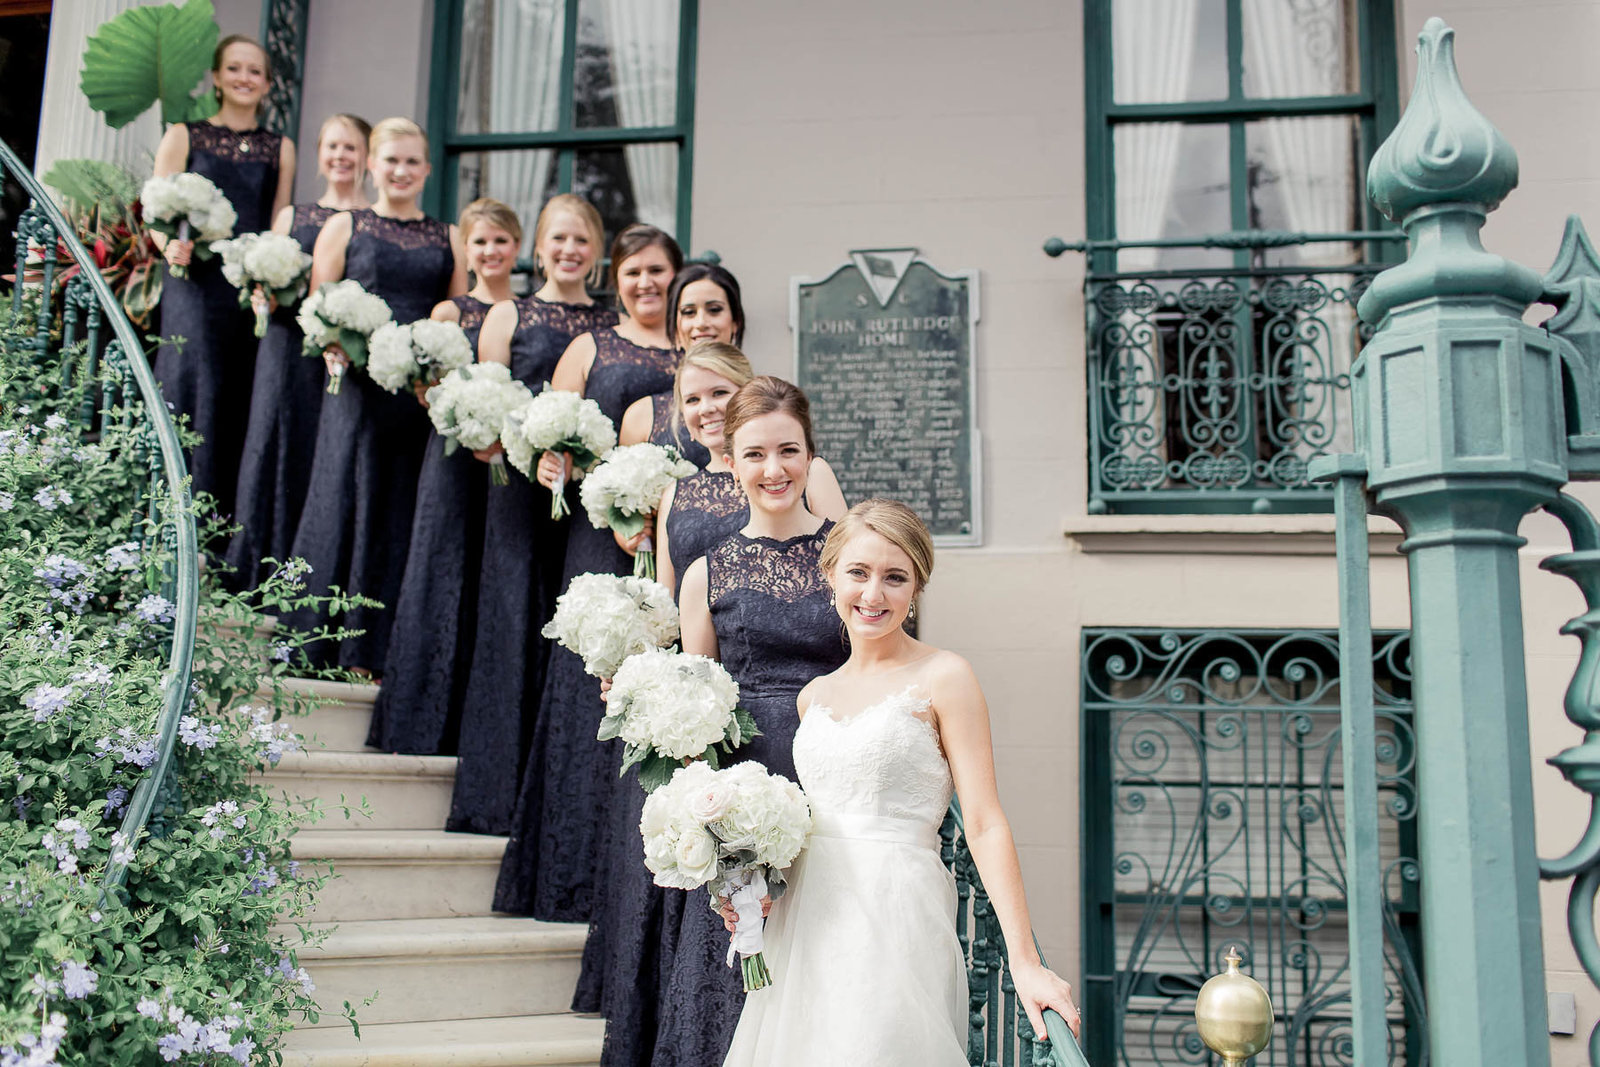 Bride poses with bridesmaids on ornate staircase, John Rutledge House Inn, Charleston, South Carolina